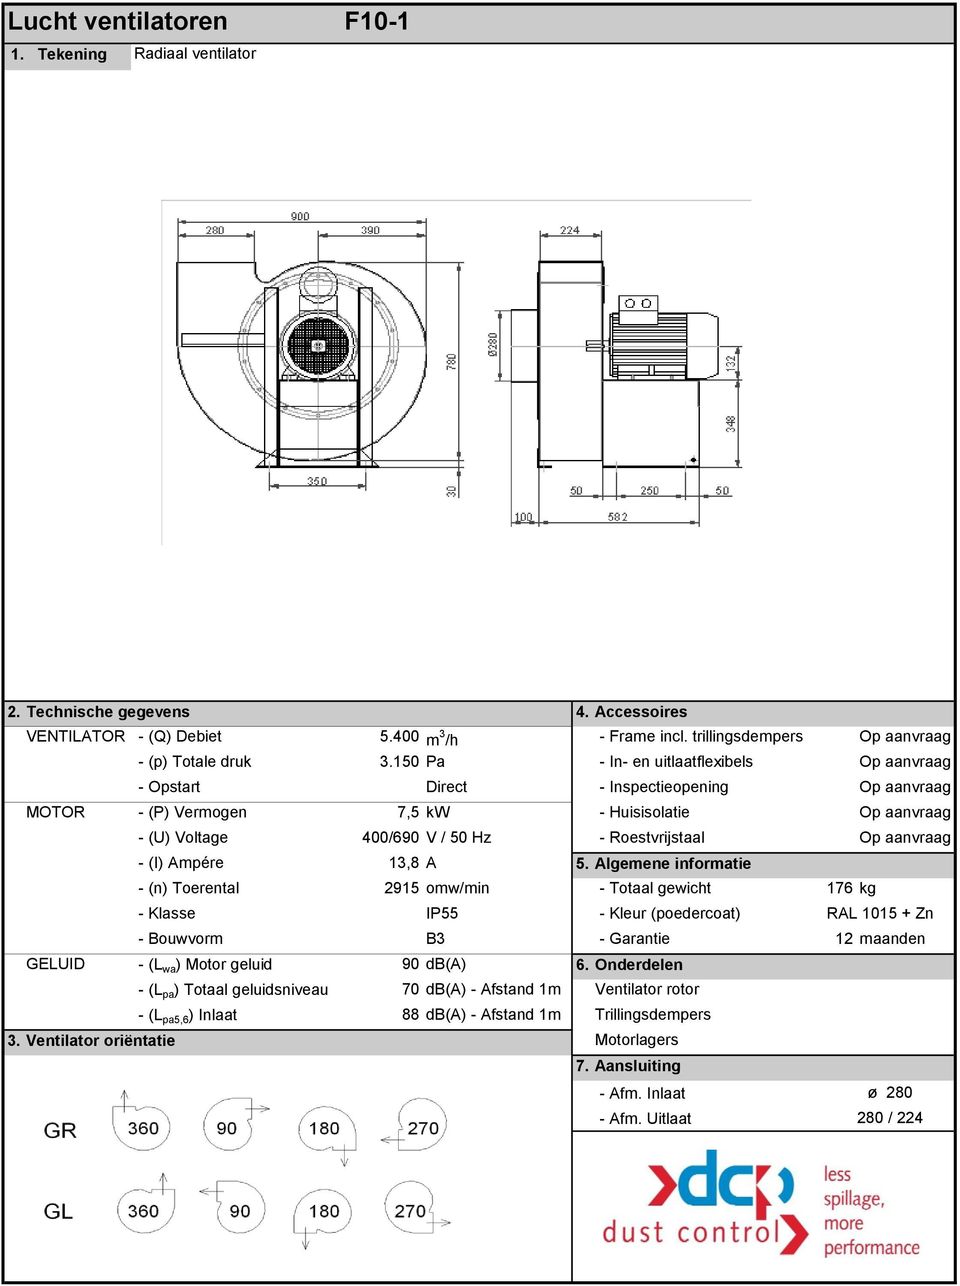 Algemene informatie - (n) Toerental 2915 omw/min - Totaal gewicht 176 kg GELUID - (L wa ) Motor geluid 90 db(a) 6.